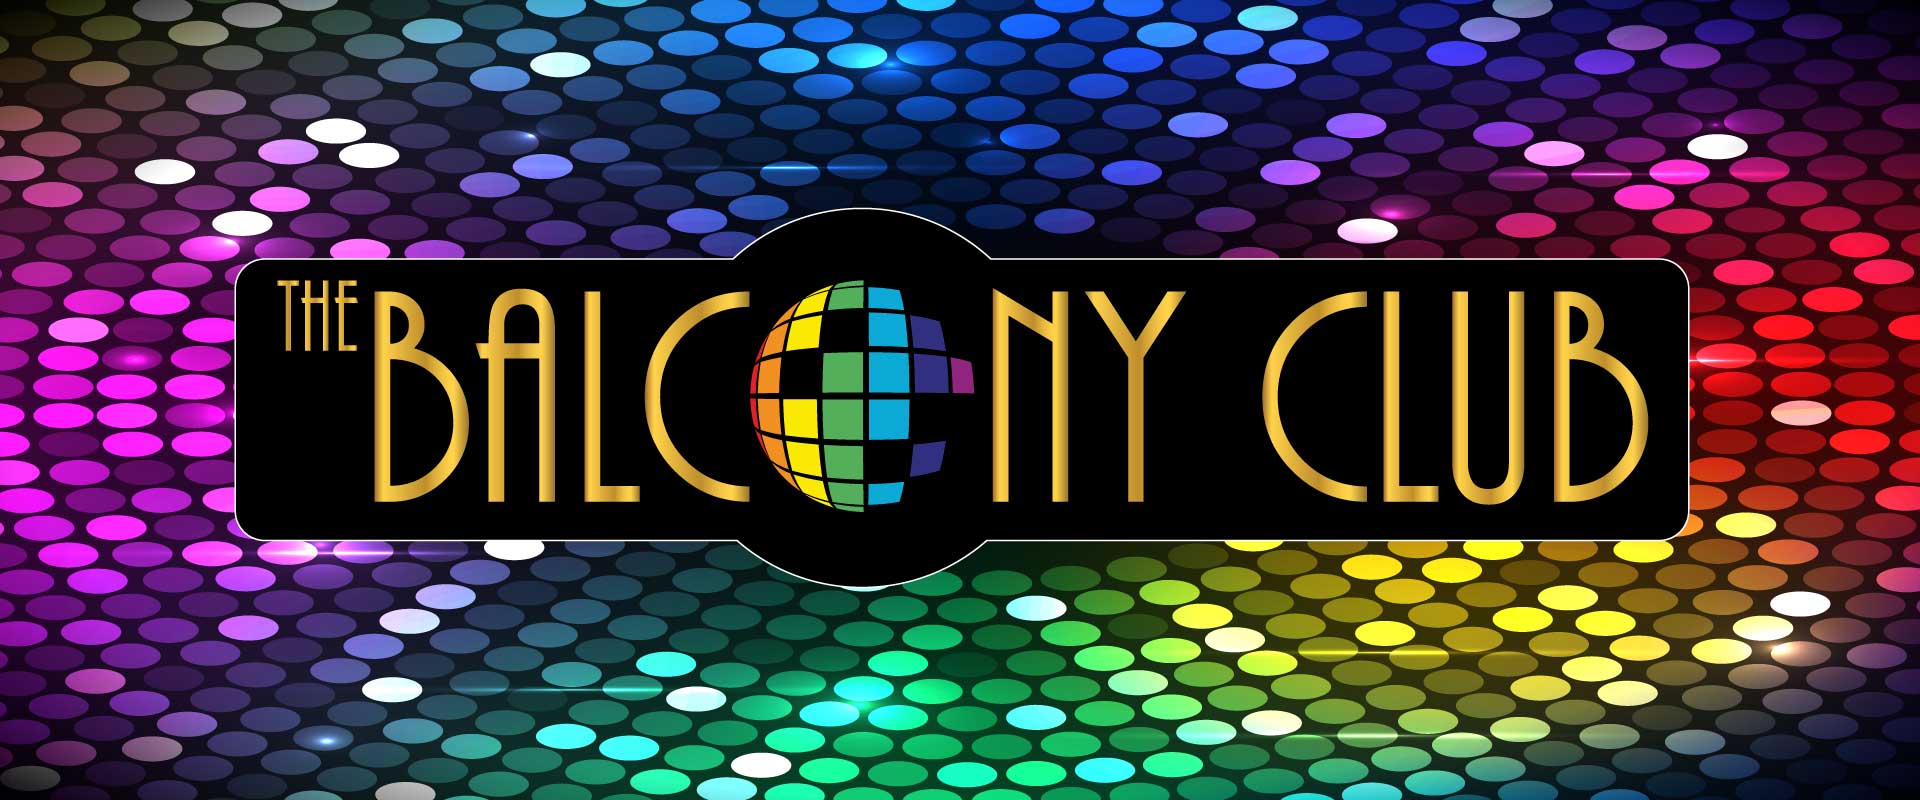 The Balcony Club - Slider - Logo